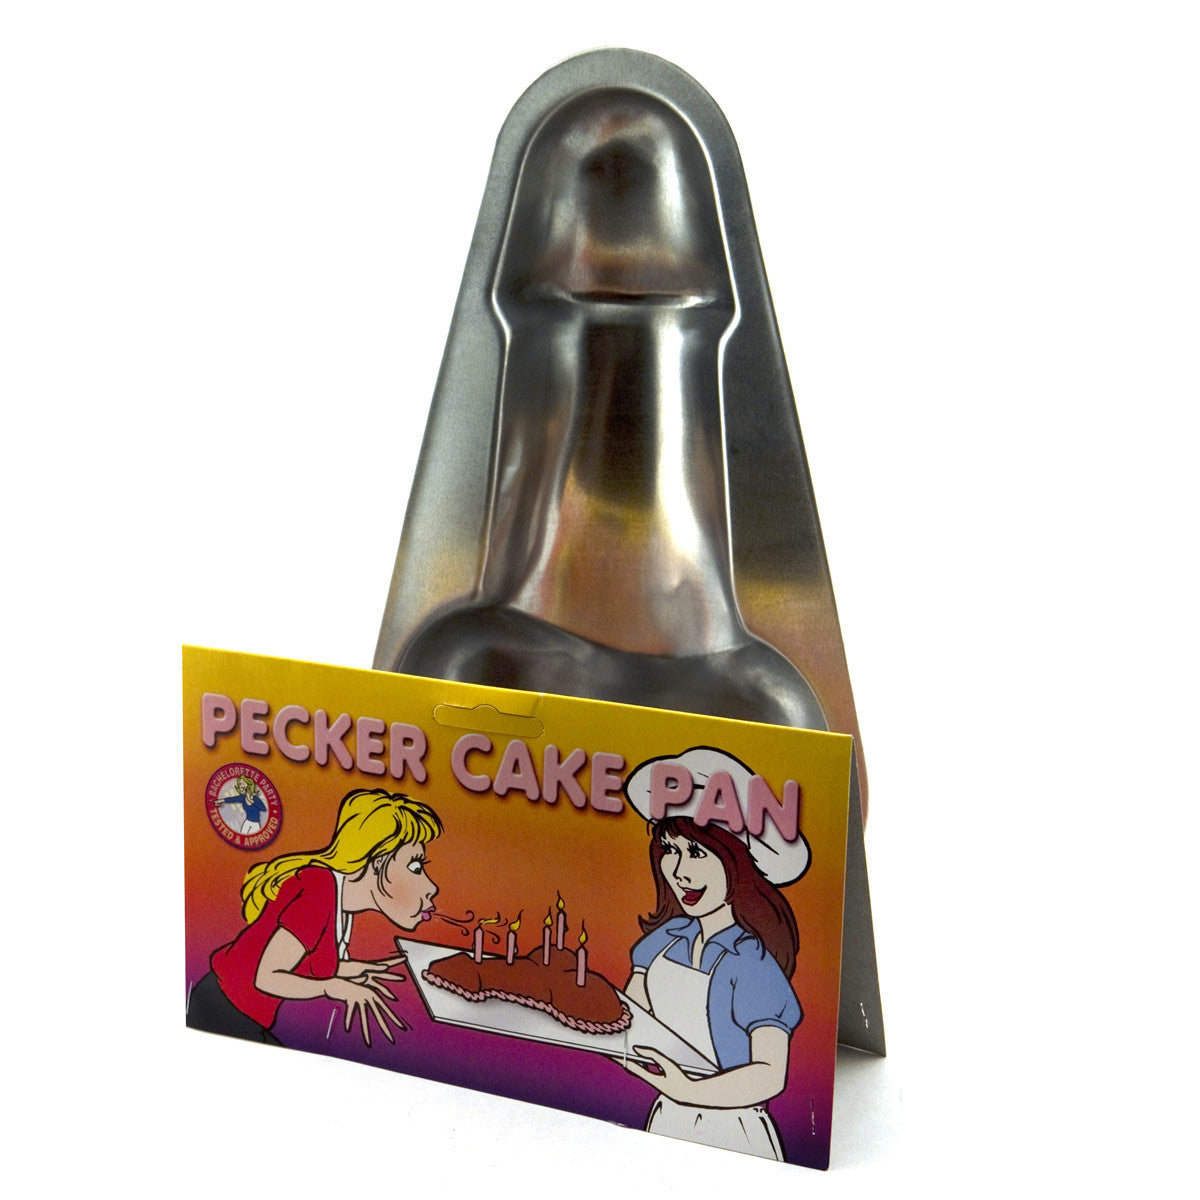 Bachelorette Party Supplies - Jumbo Penis Cake Pan - Pecker Cake Mold